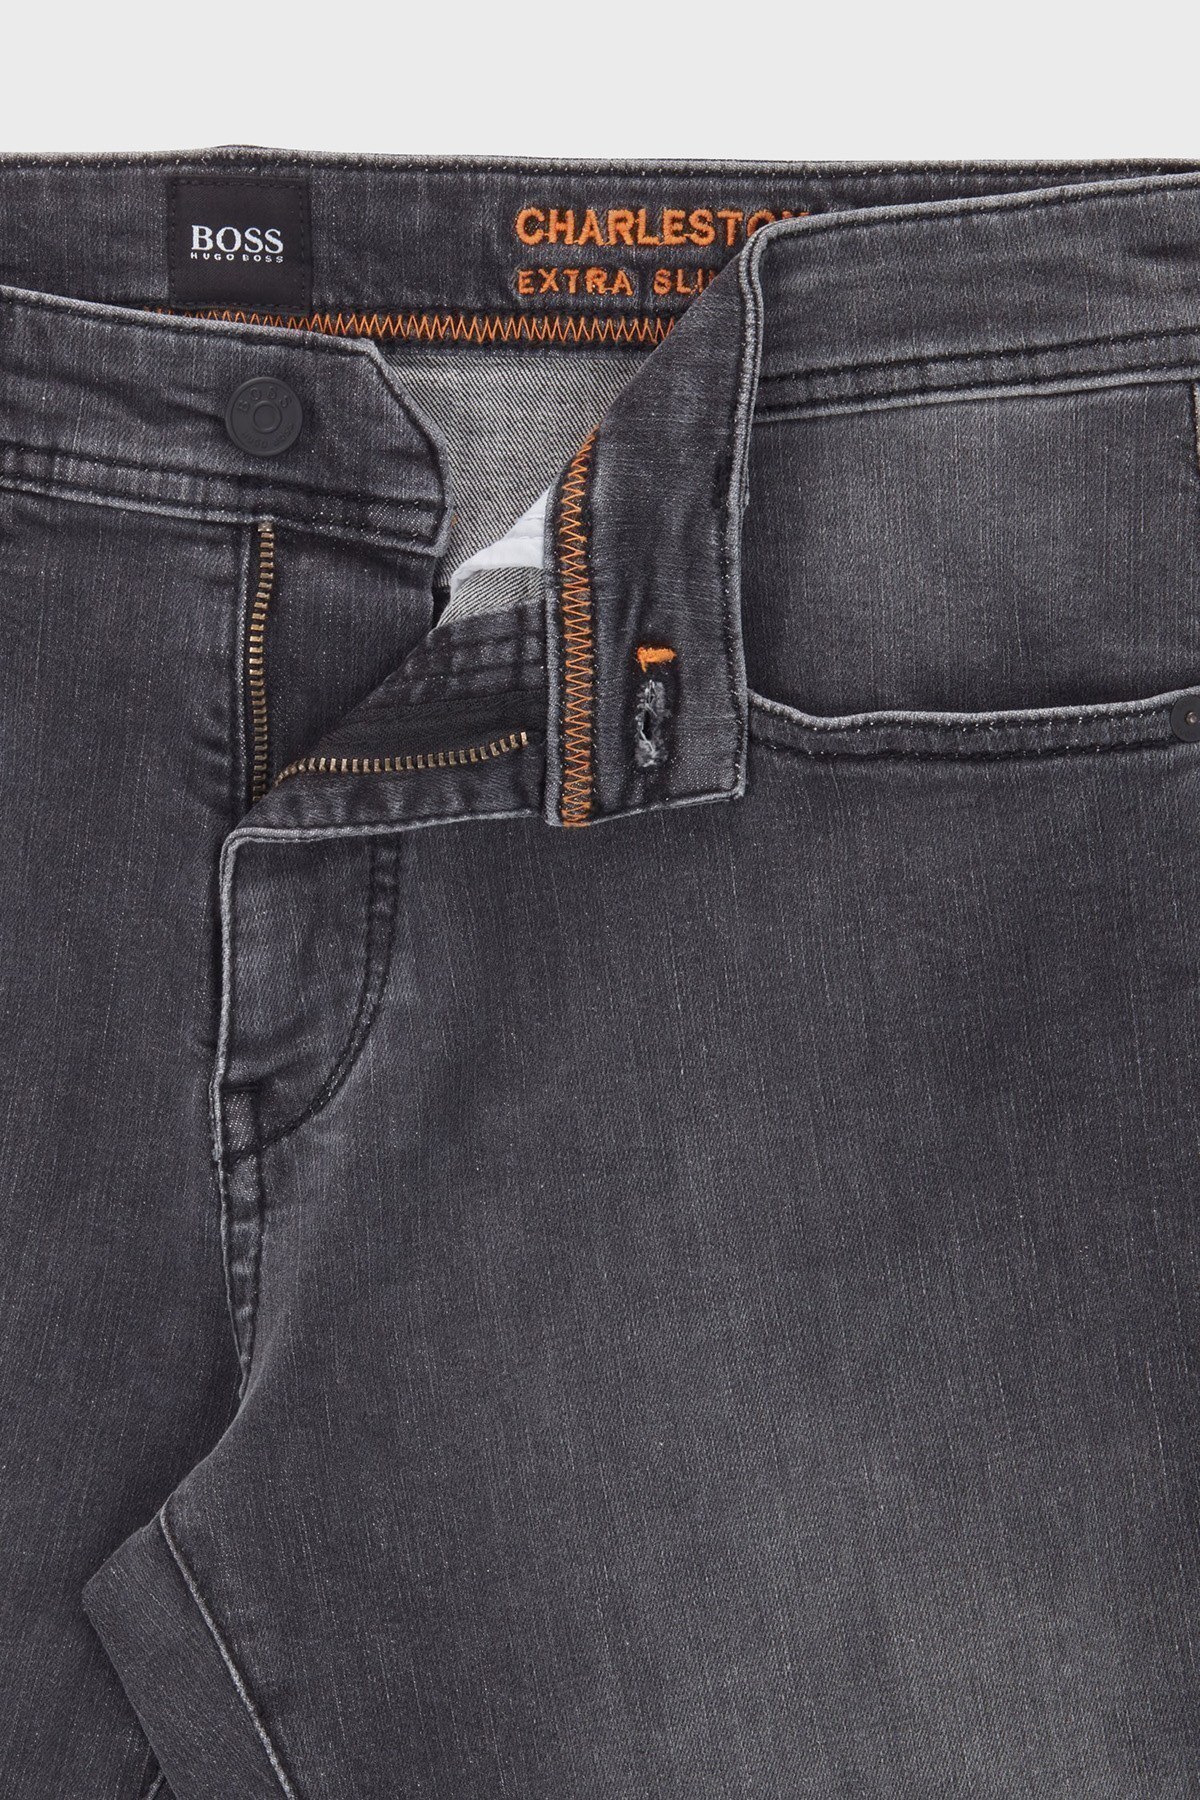 Hugo Boss Pamuklu Skinny Fit Jeans Erkek Kot Pantolon 50458965 044 GRİ